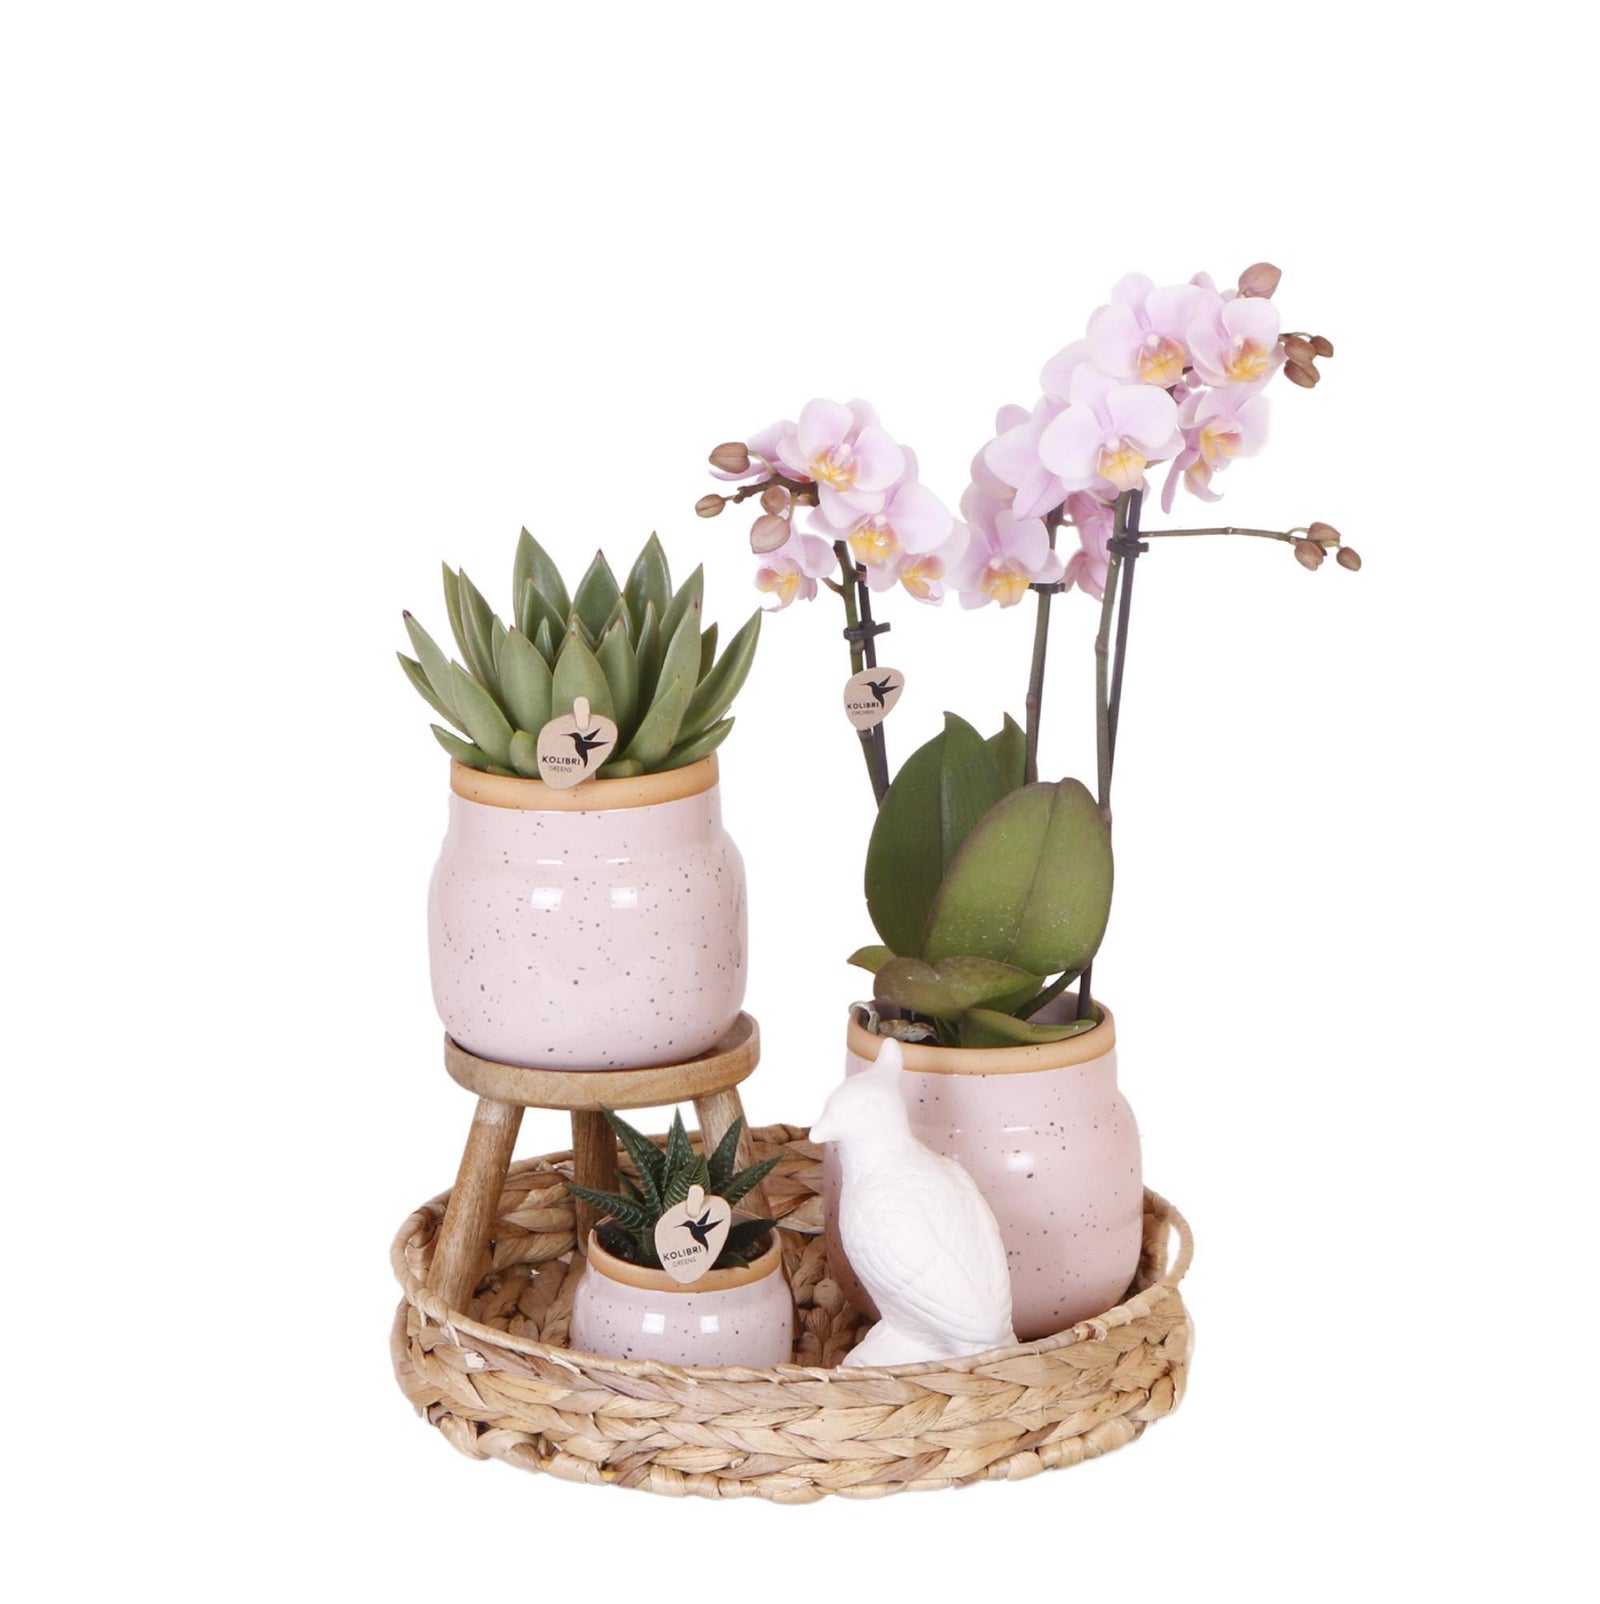 Kolibri Company | Gift set Romantic| Plantenset met roze Phalaenopsis Orchidee en Succulenten incl. keramieken sierpotten